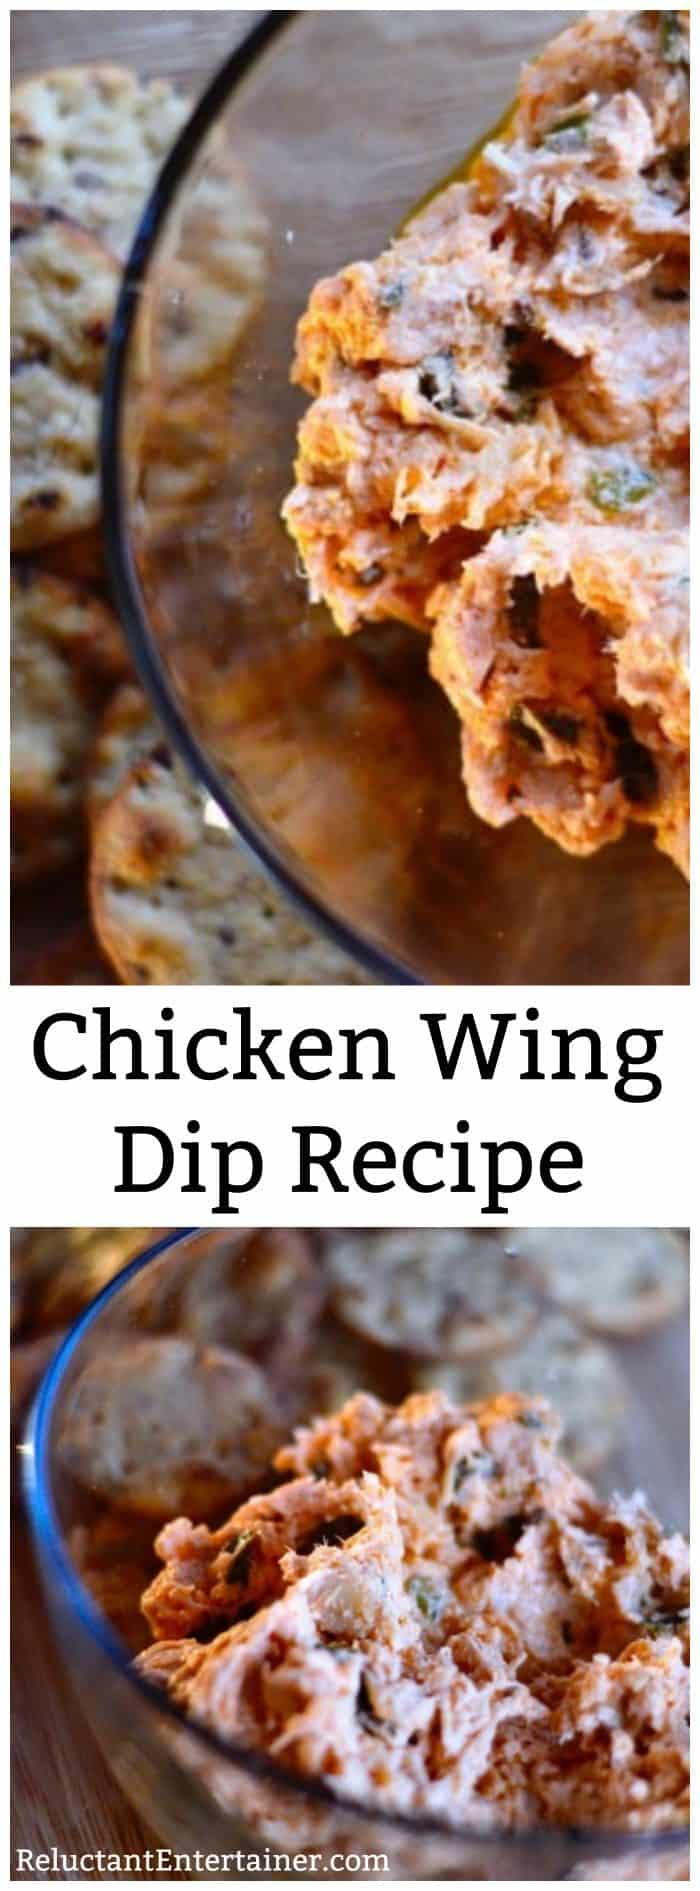 Chicken Wing Dip Recipe